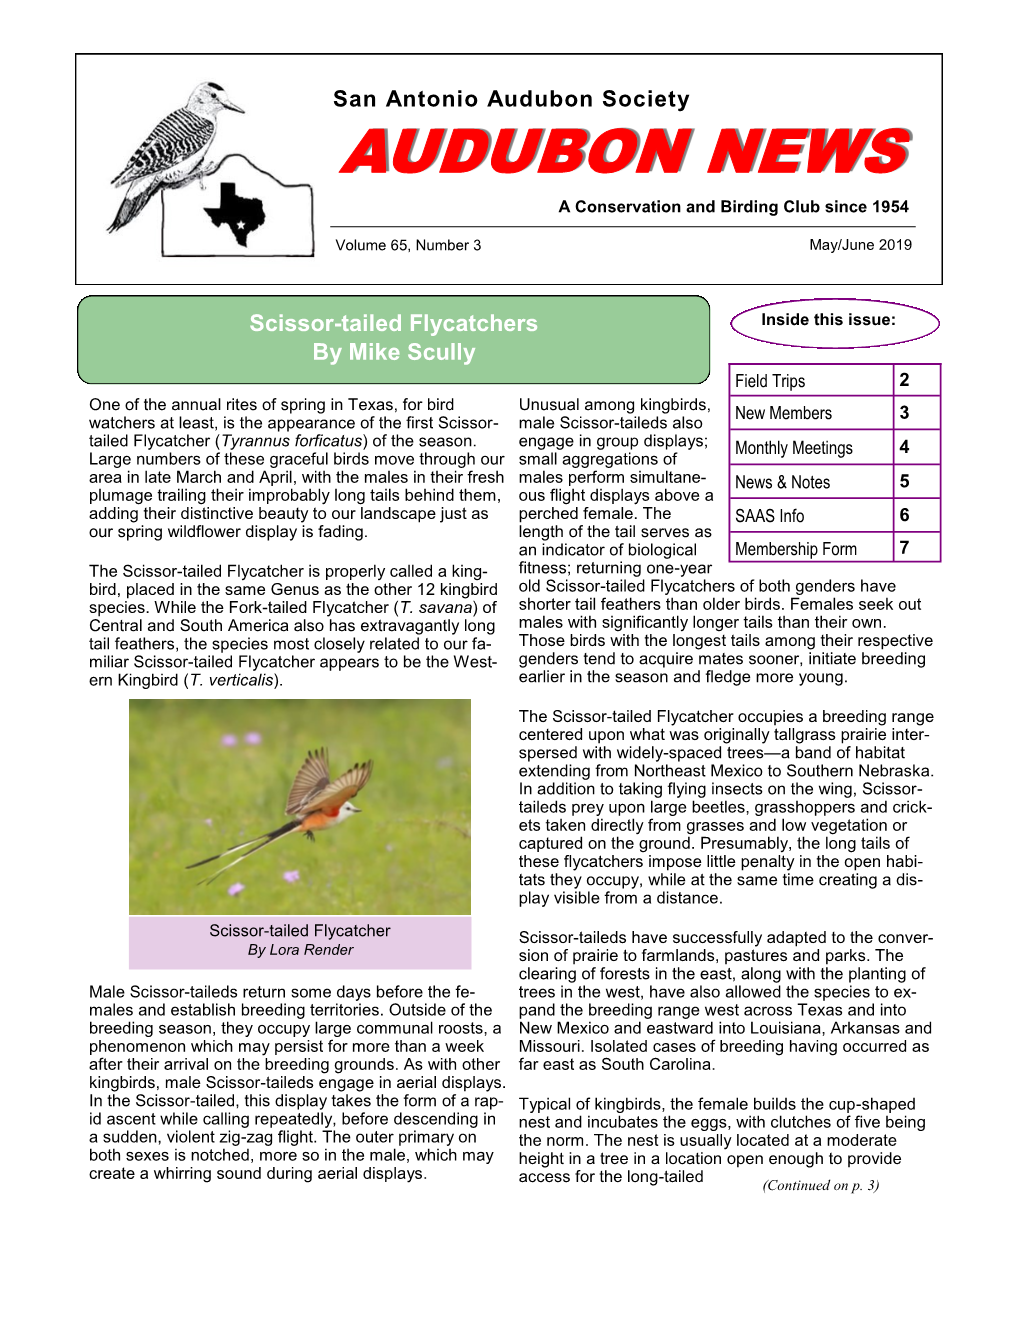 AUDUBON NEWS a Conservation and Birding Club Since 1954